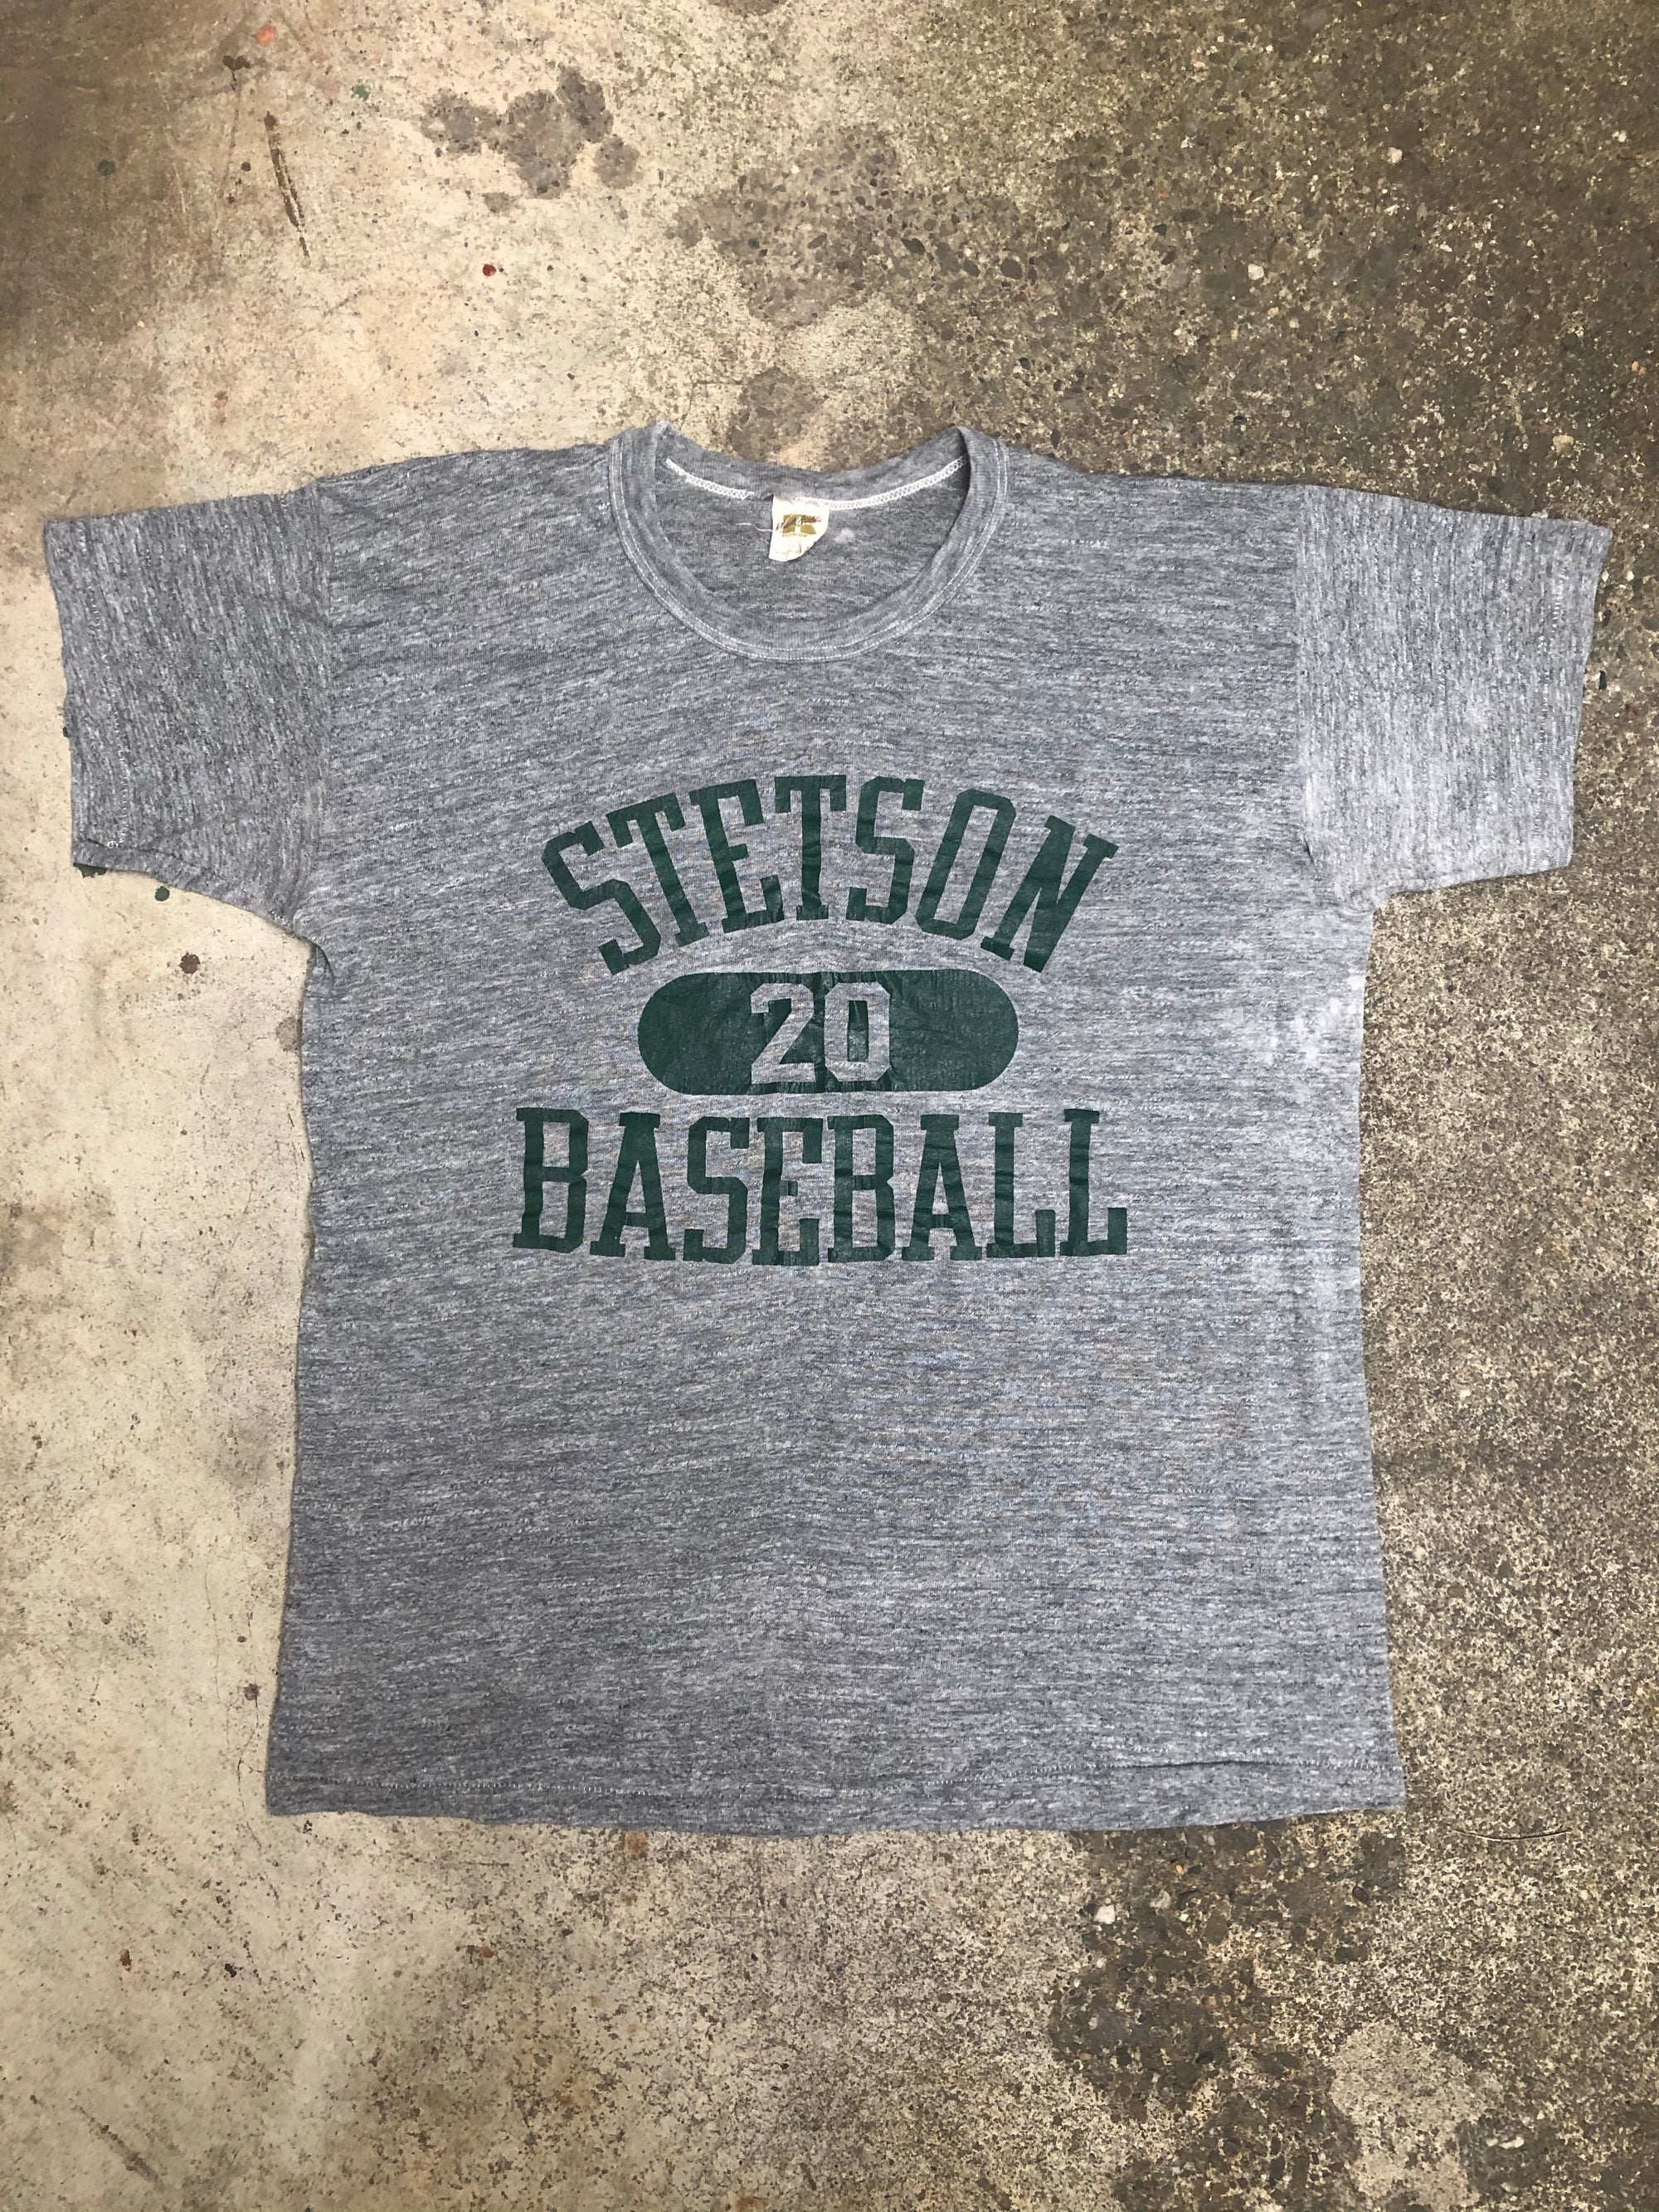 1970s Russell Single Stitched “Stetson Baseball” Tee